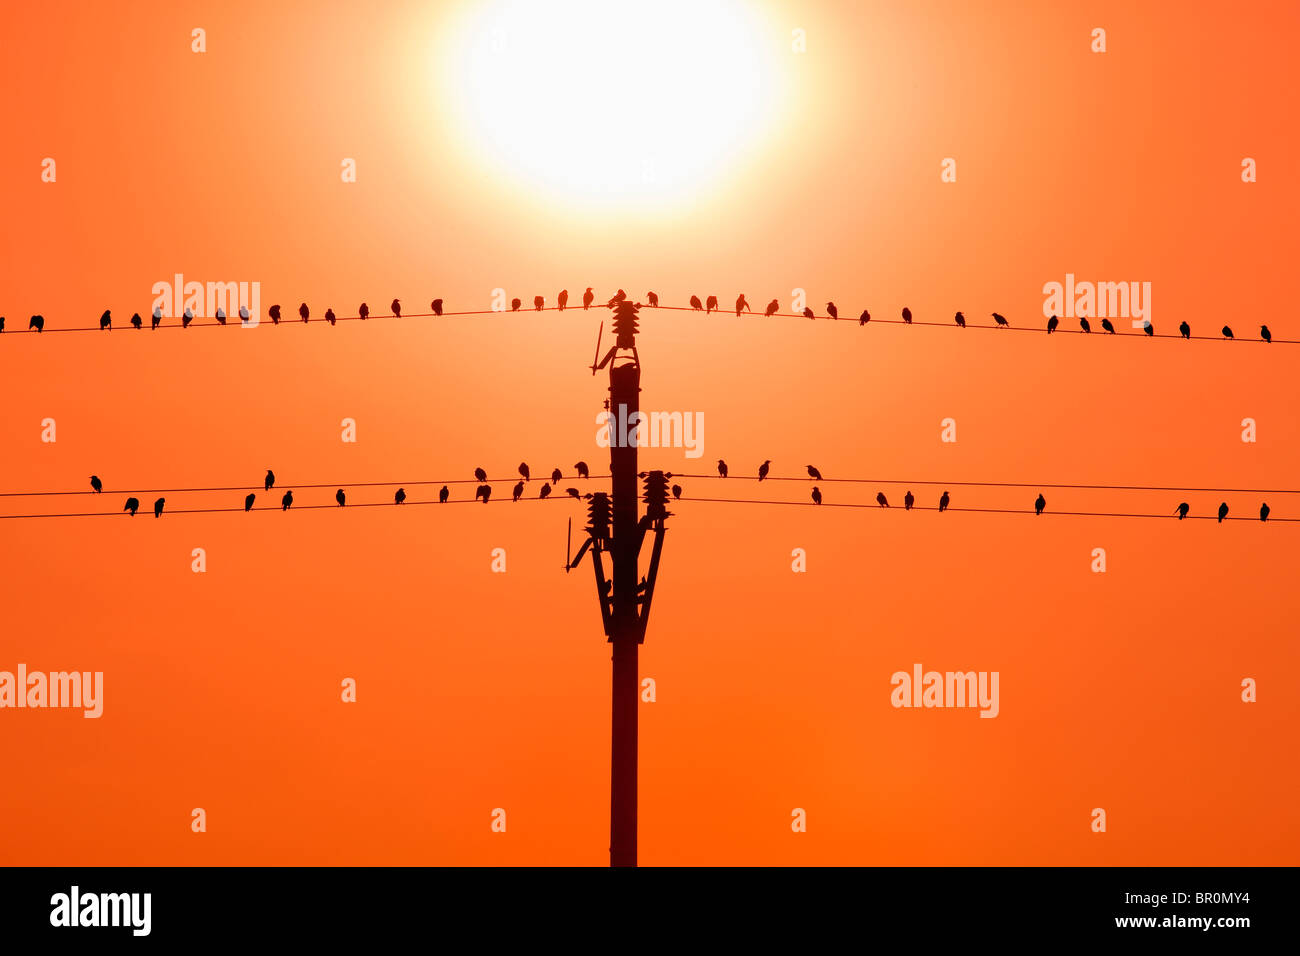 Las aves sentadas en alambres en Sunset Foto de stock